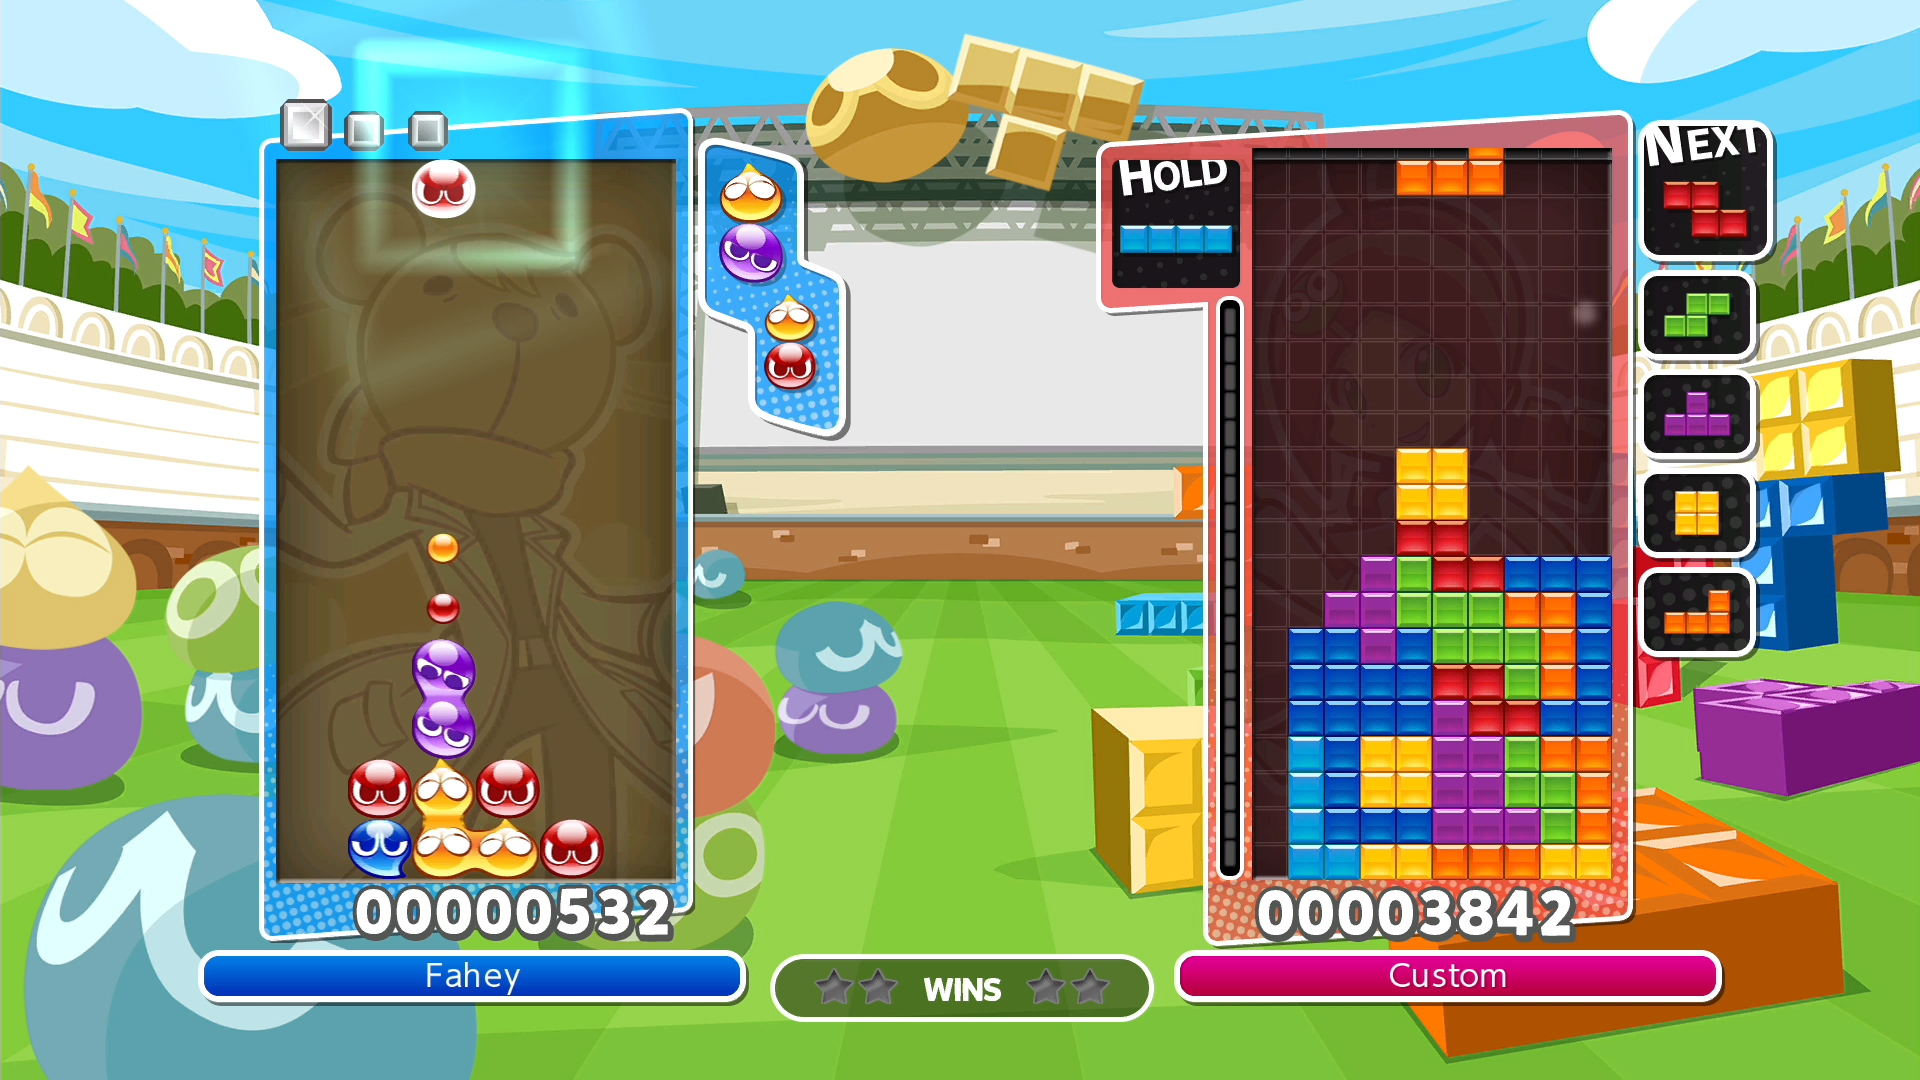 Puyo Puyo Tetris Is Delightful, Even When You’re Losing